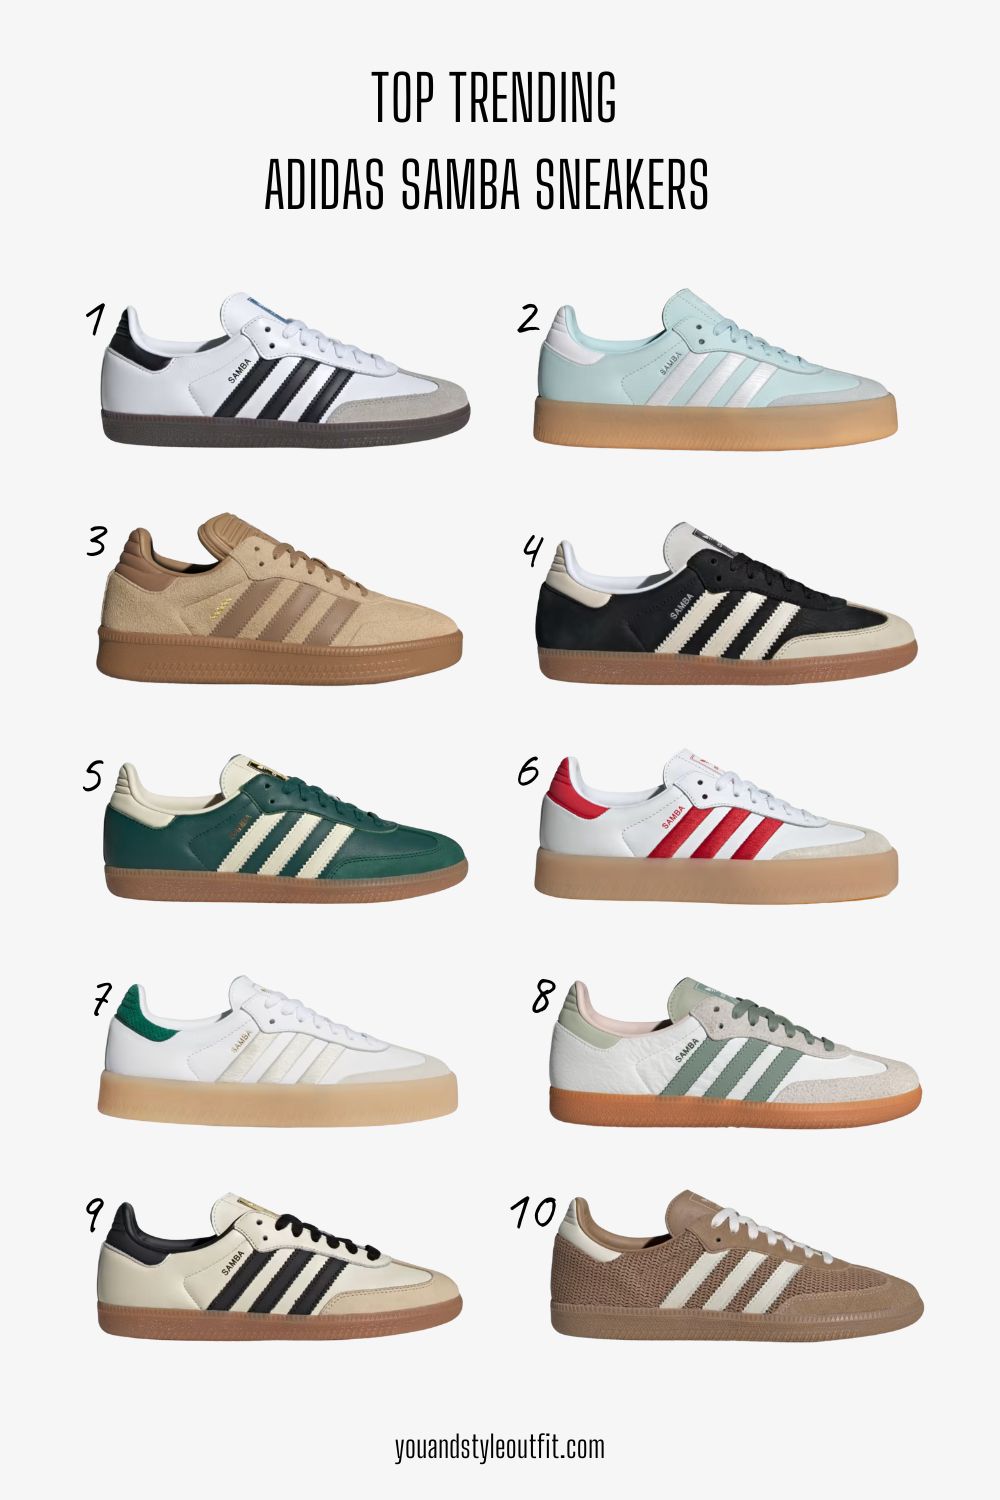 Top trending Adidas Samba Sneakers